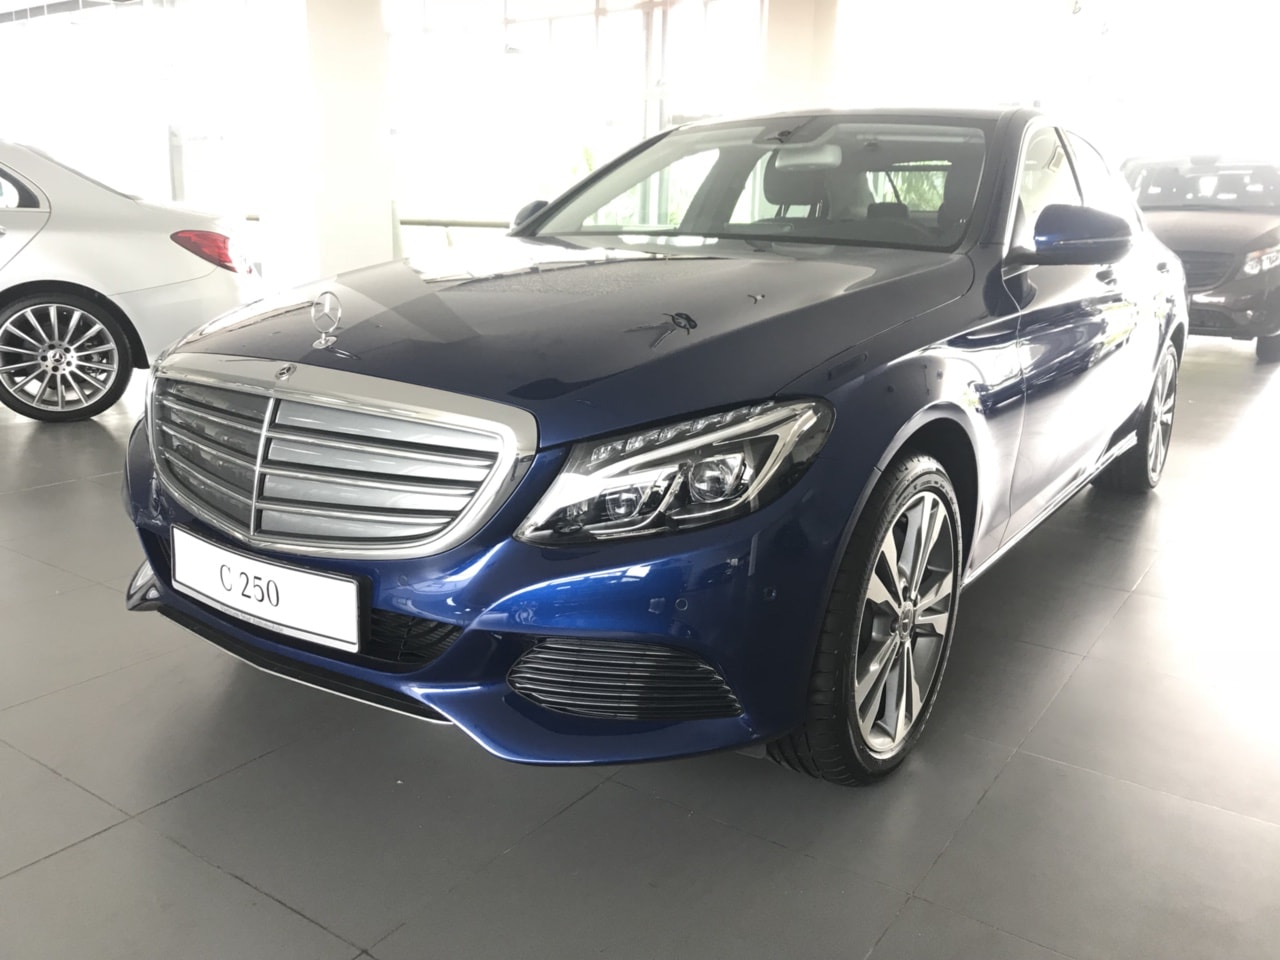 Mercedes C250 2018 2019 moi nhat (8)